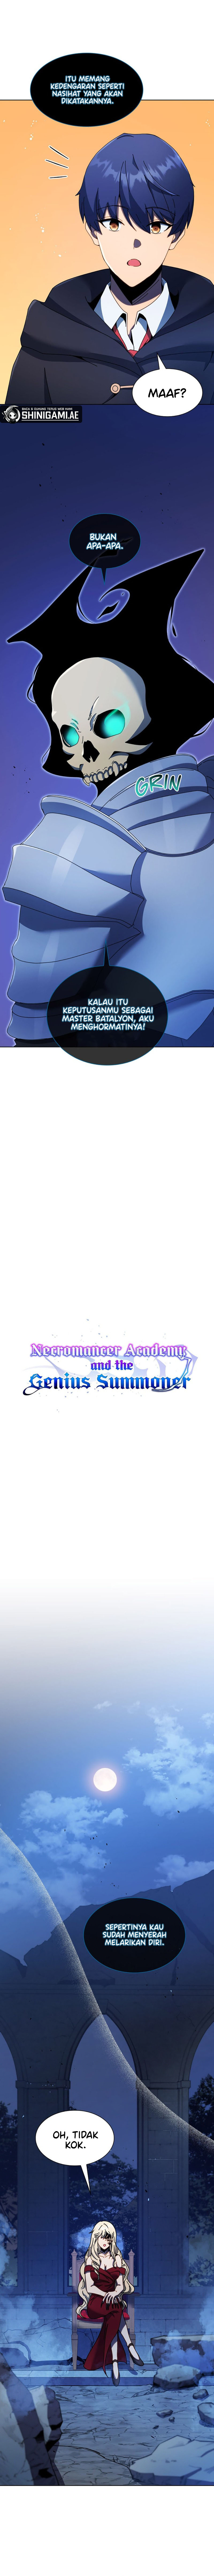 necromancer-academys-genius-summoner Chapter 47